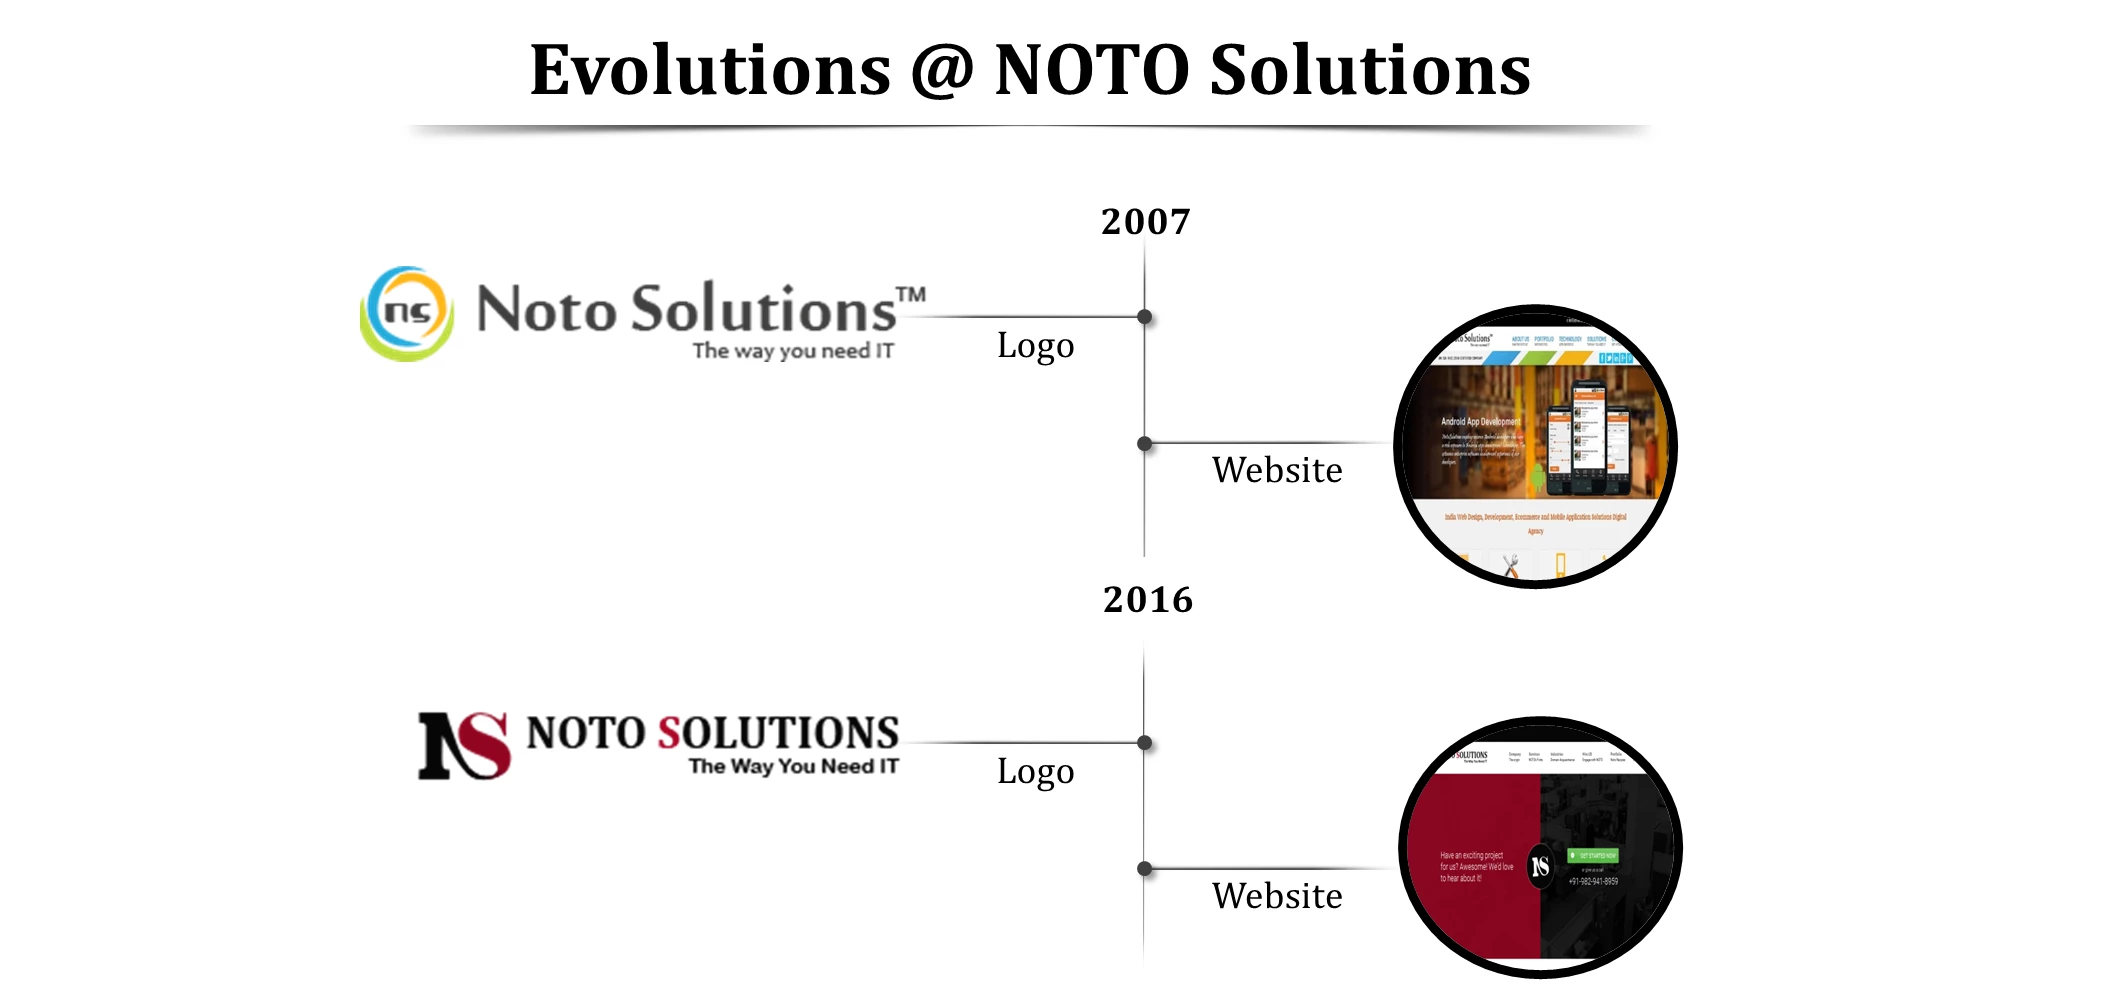 Evolution @ Noto Solutions